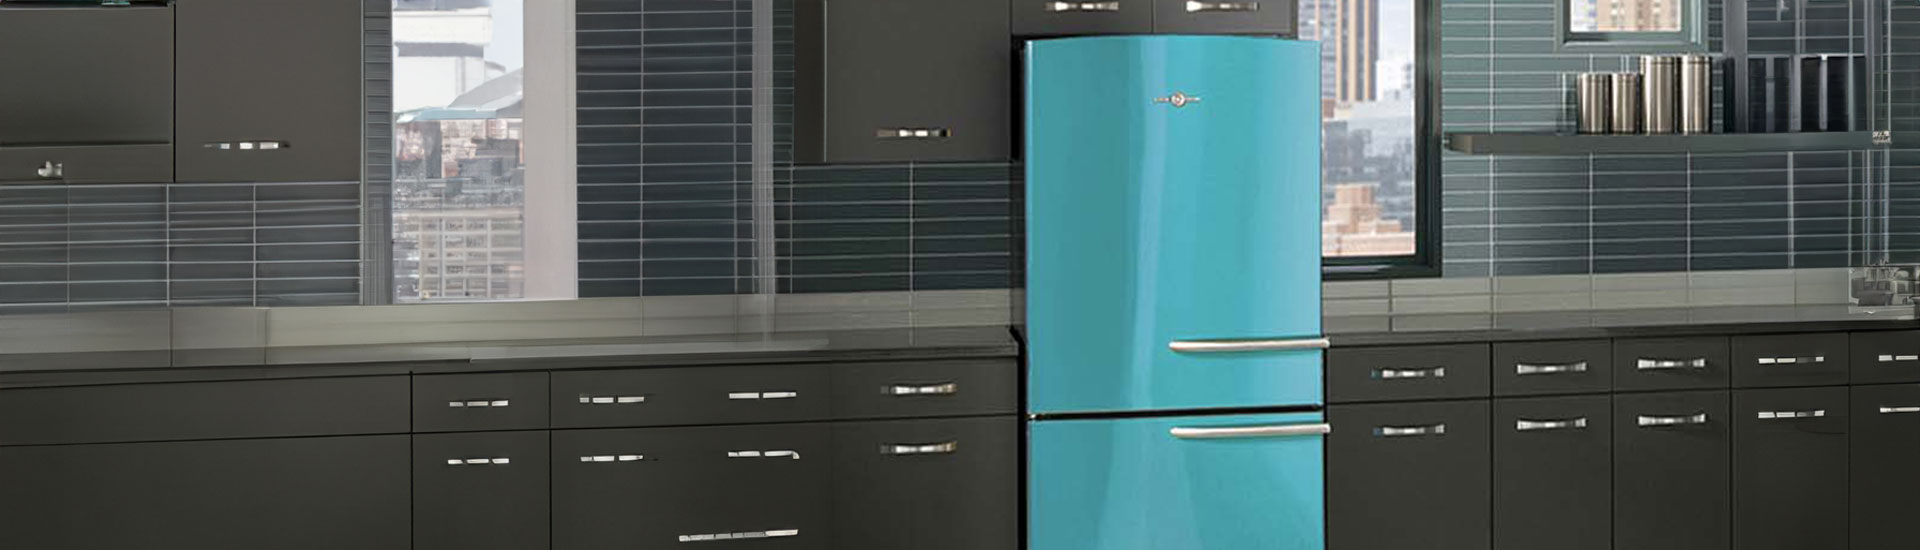 Turquoise Refrigerator Wraps